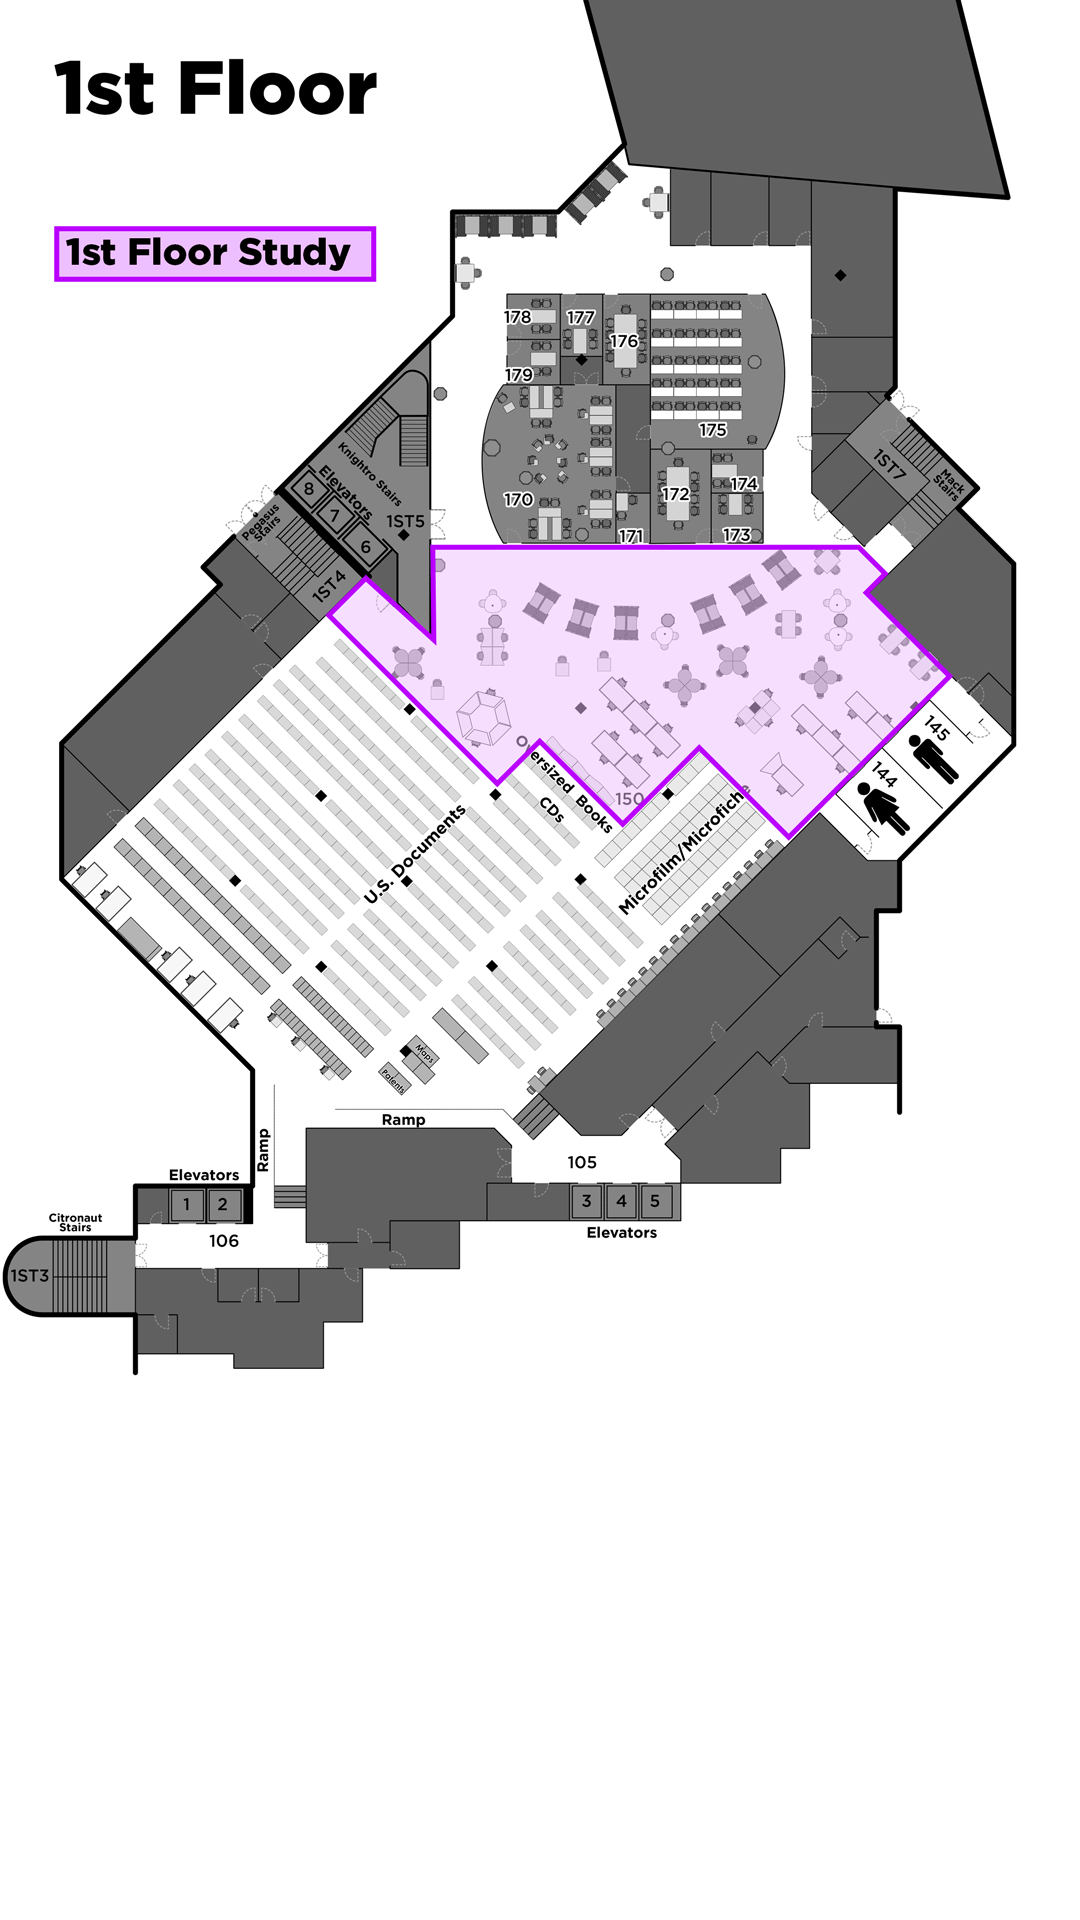 Occupancy zone map depicting 1st Floor Study zone.